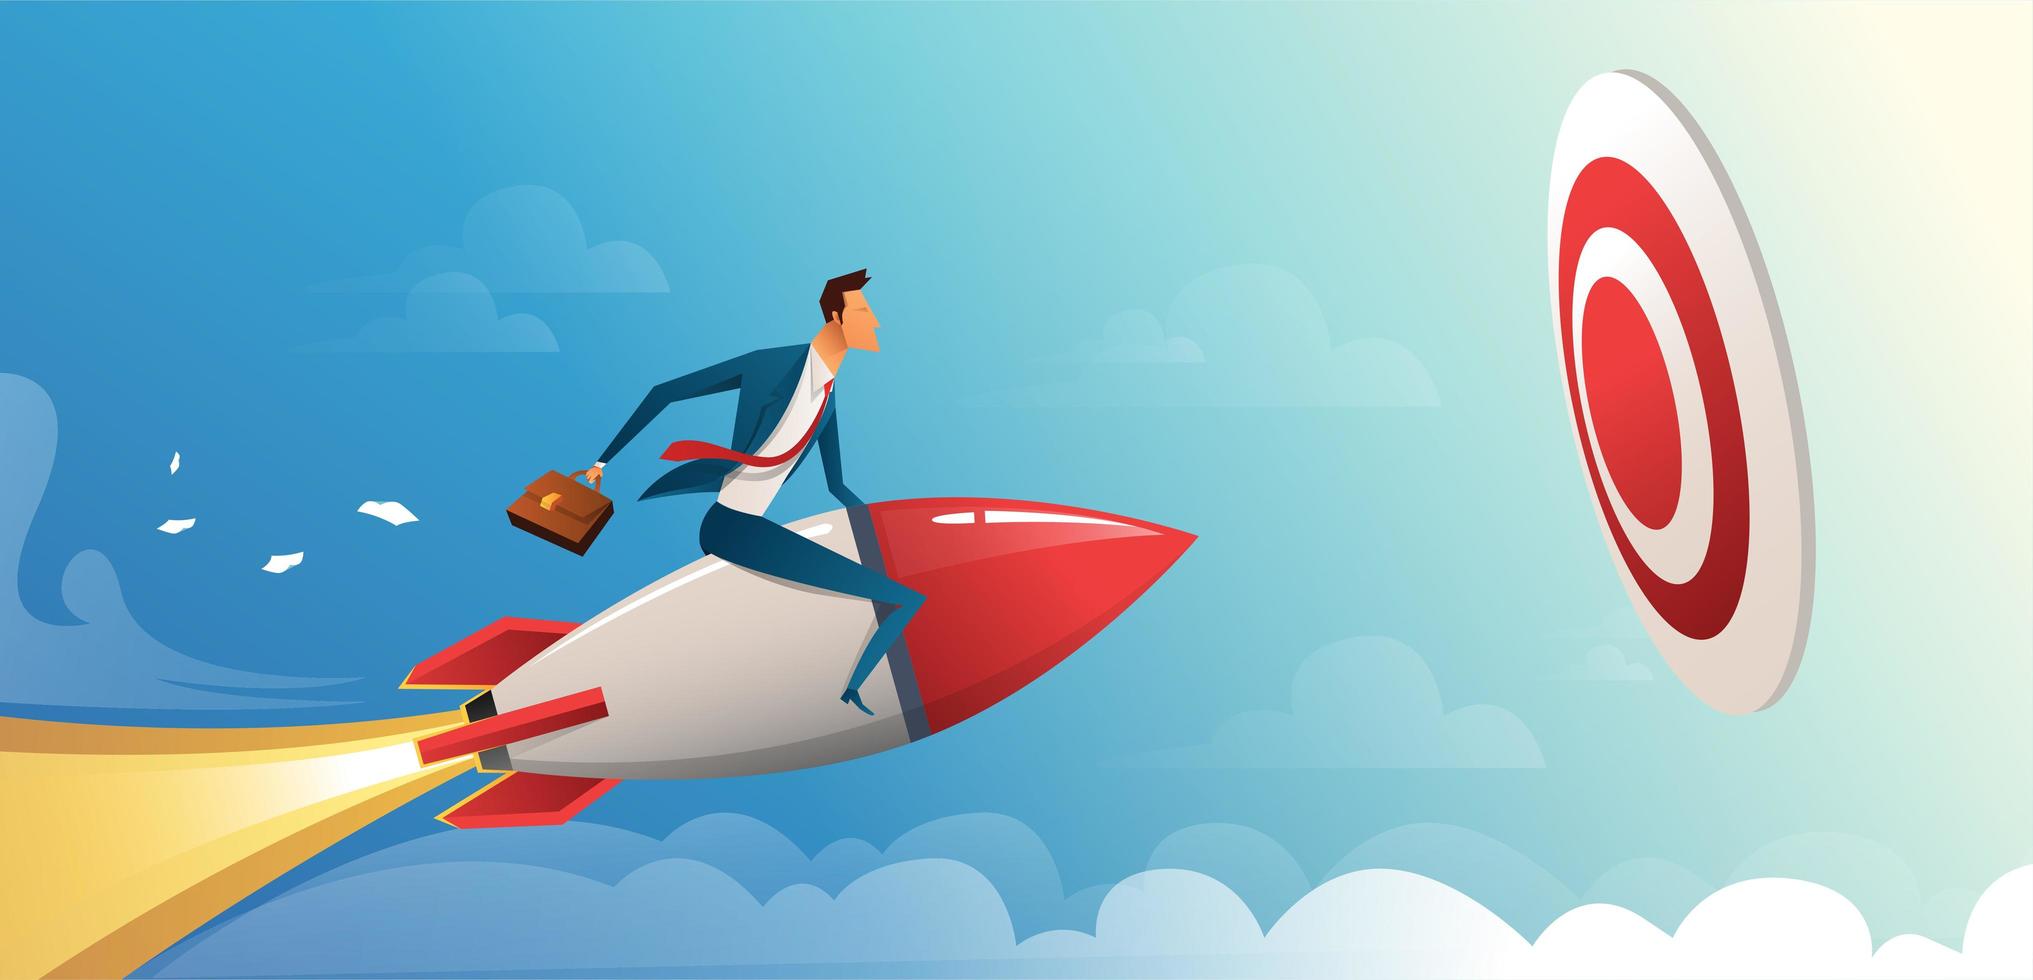 Businessman flying forward with a rocket engine to big target. Business vector concept illustration.